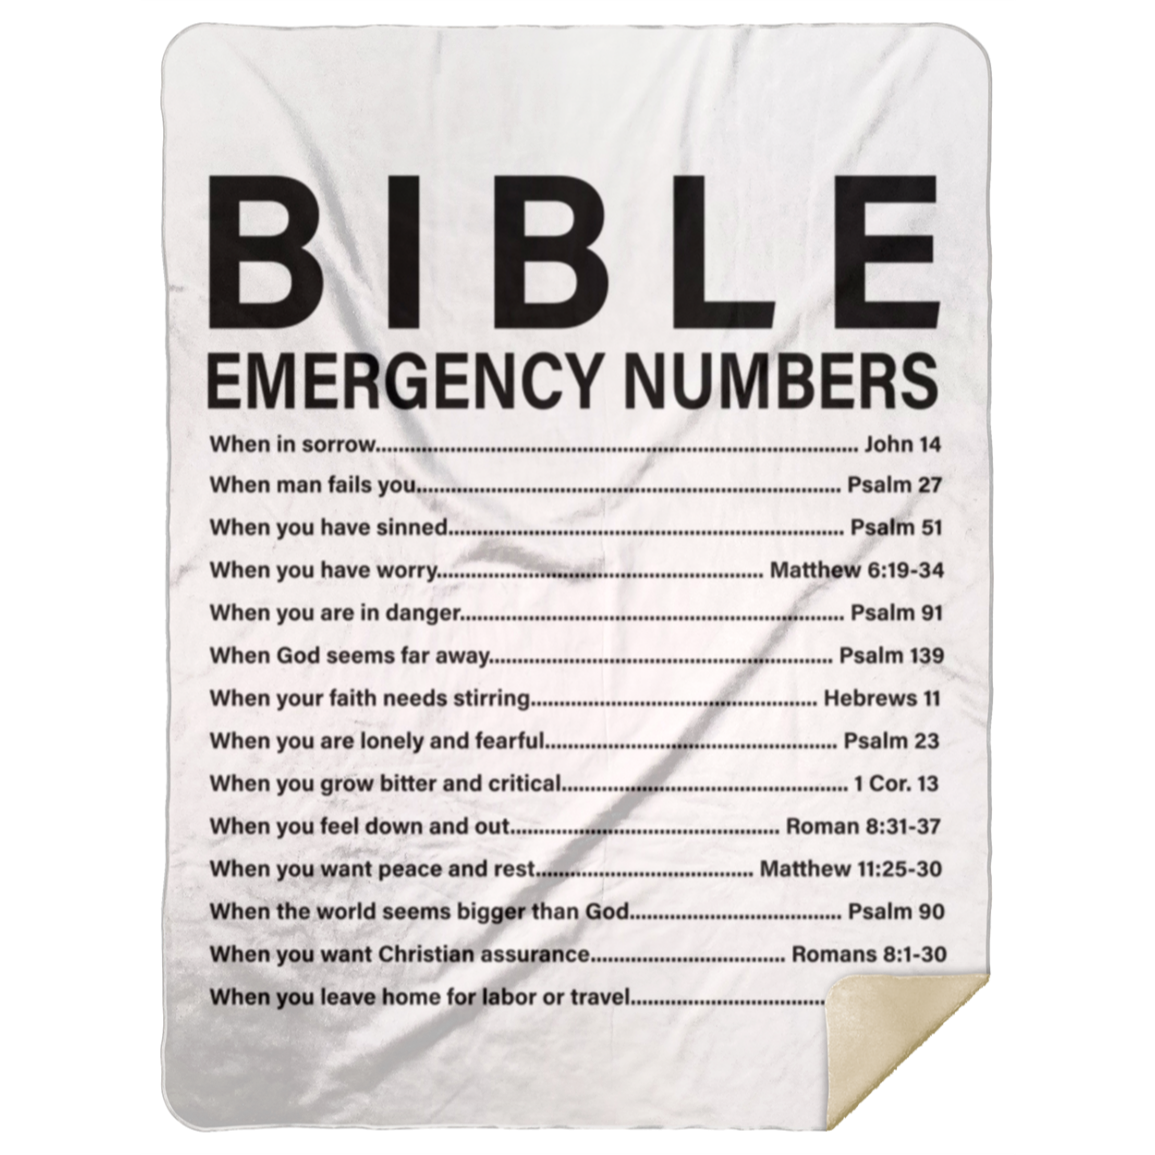 50% OFF SALE - BIBLE EMERGENCY NUMBERS BLANKET - COZY FLEECE/PREMIUM SHERPA BLANKET